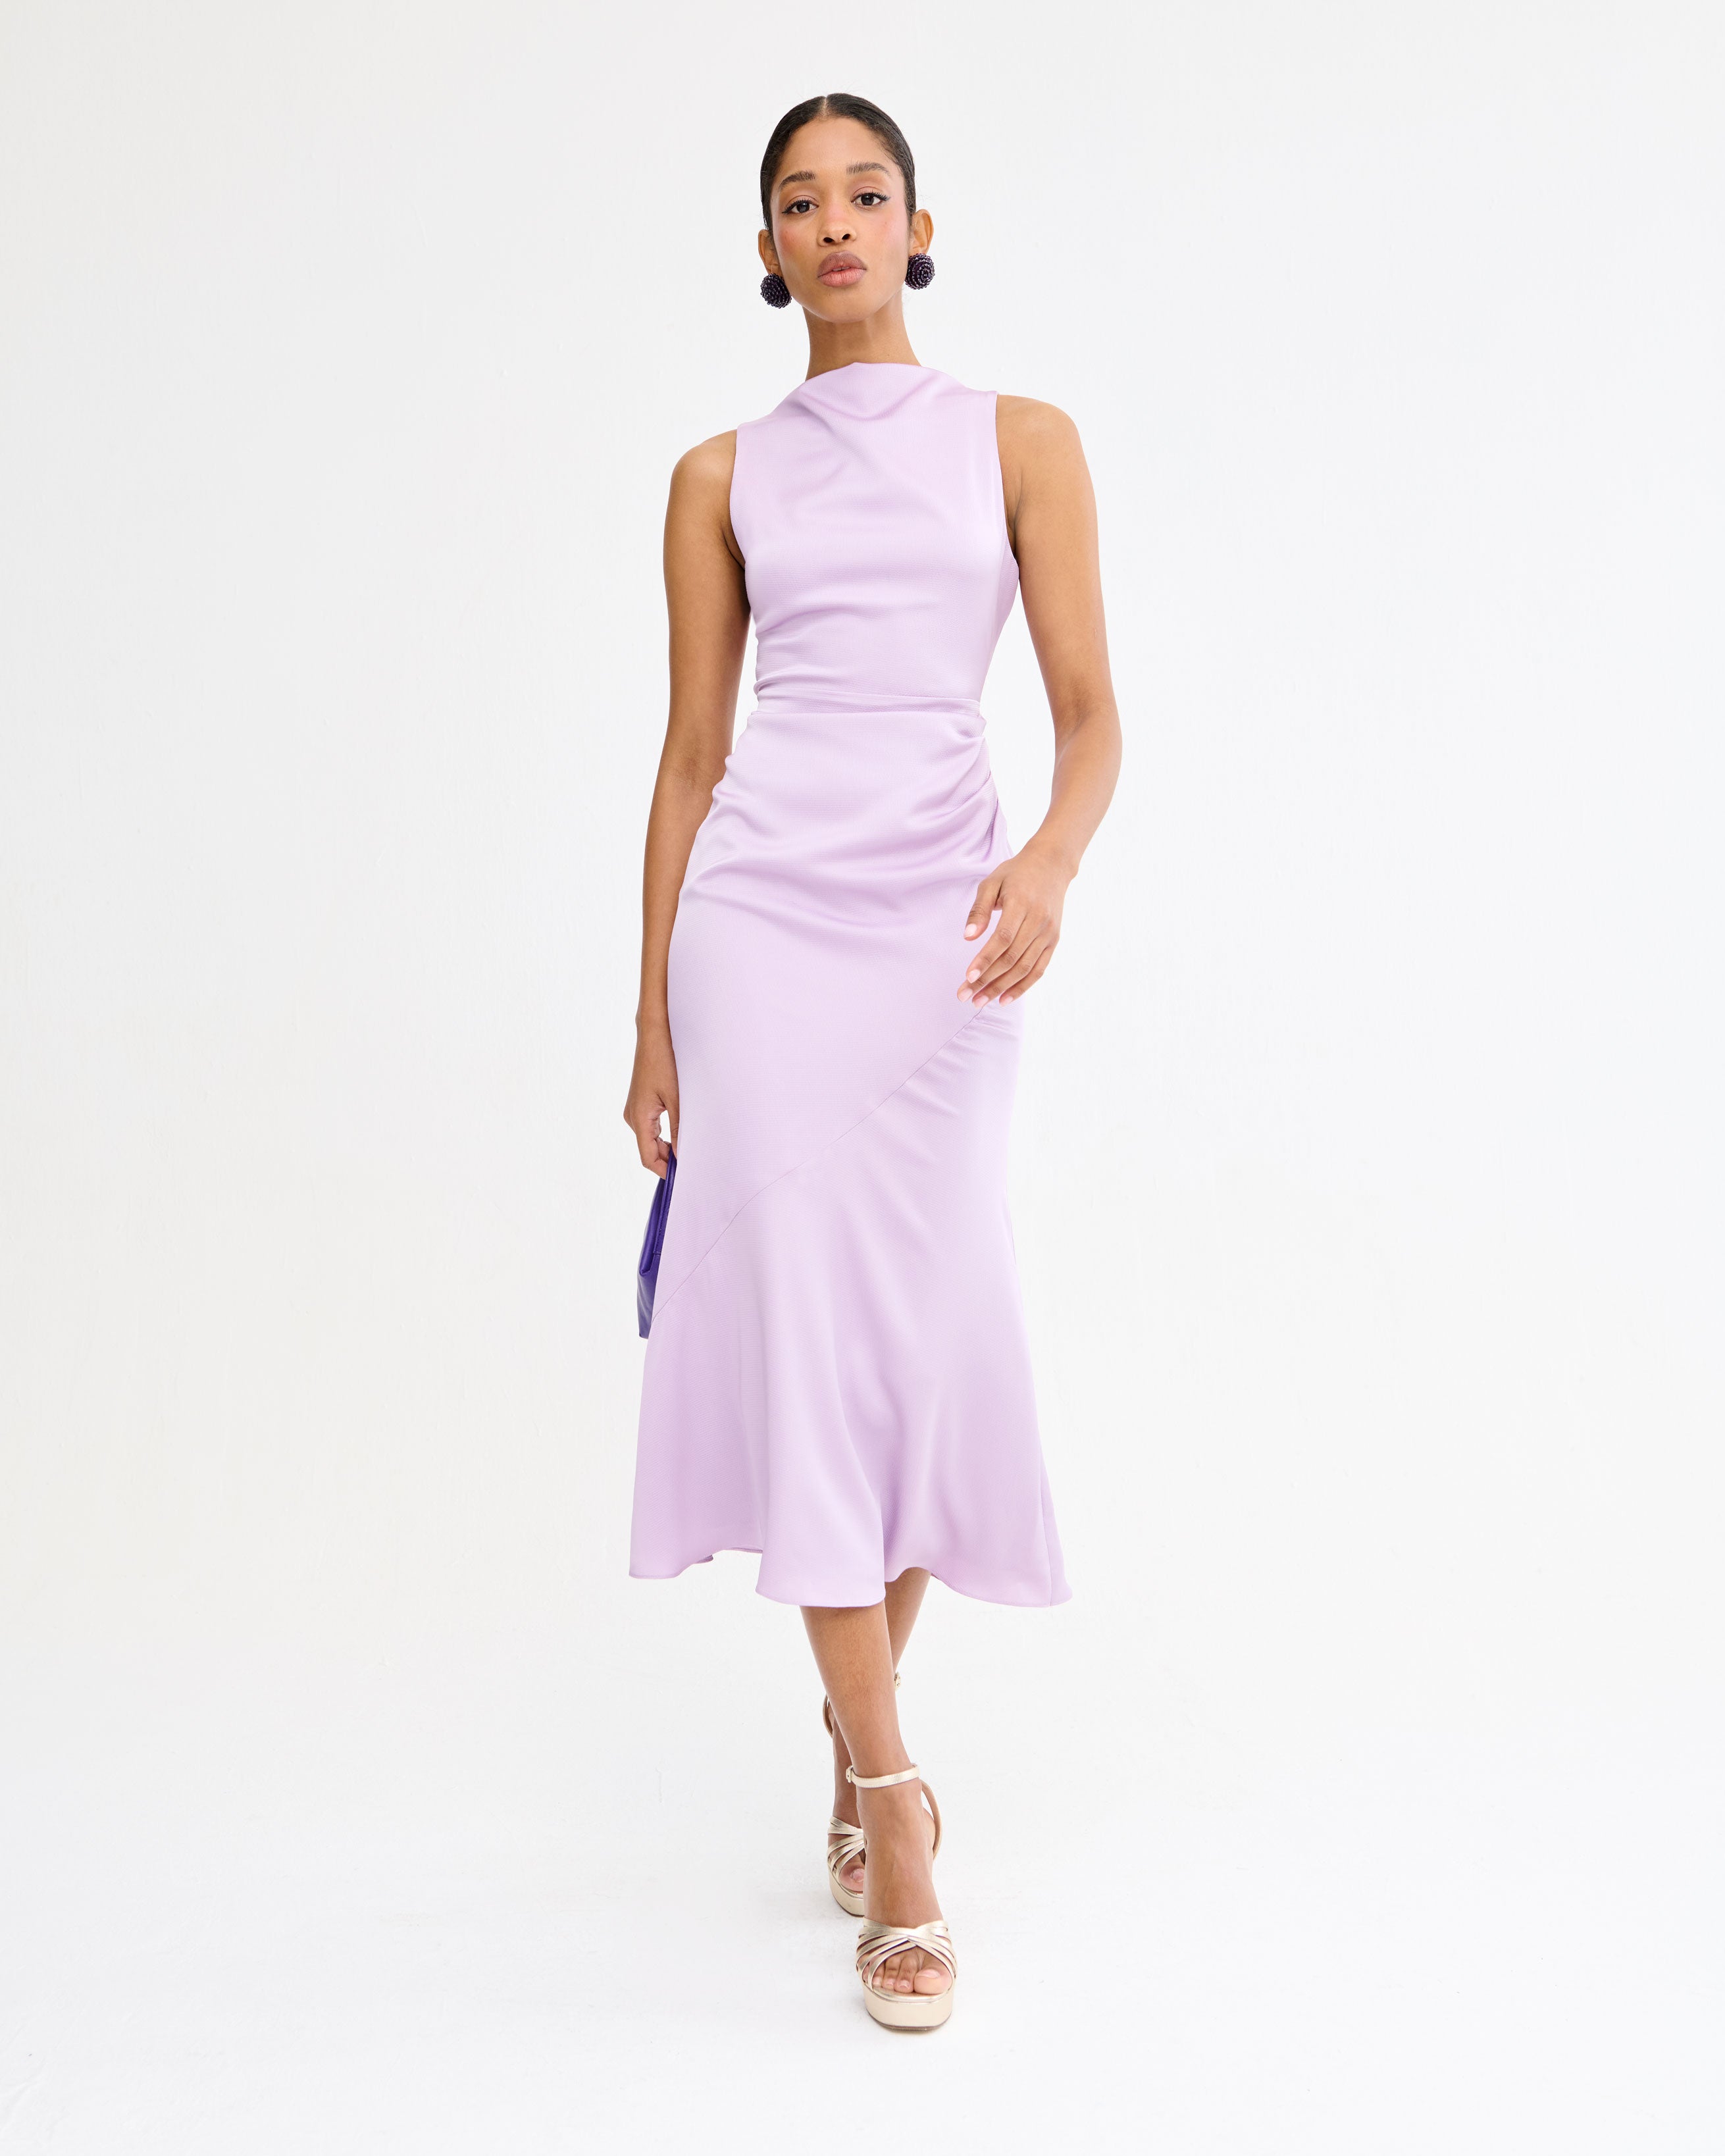 Sintra Lavender Dress